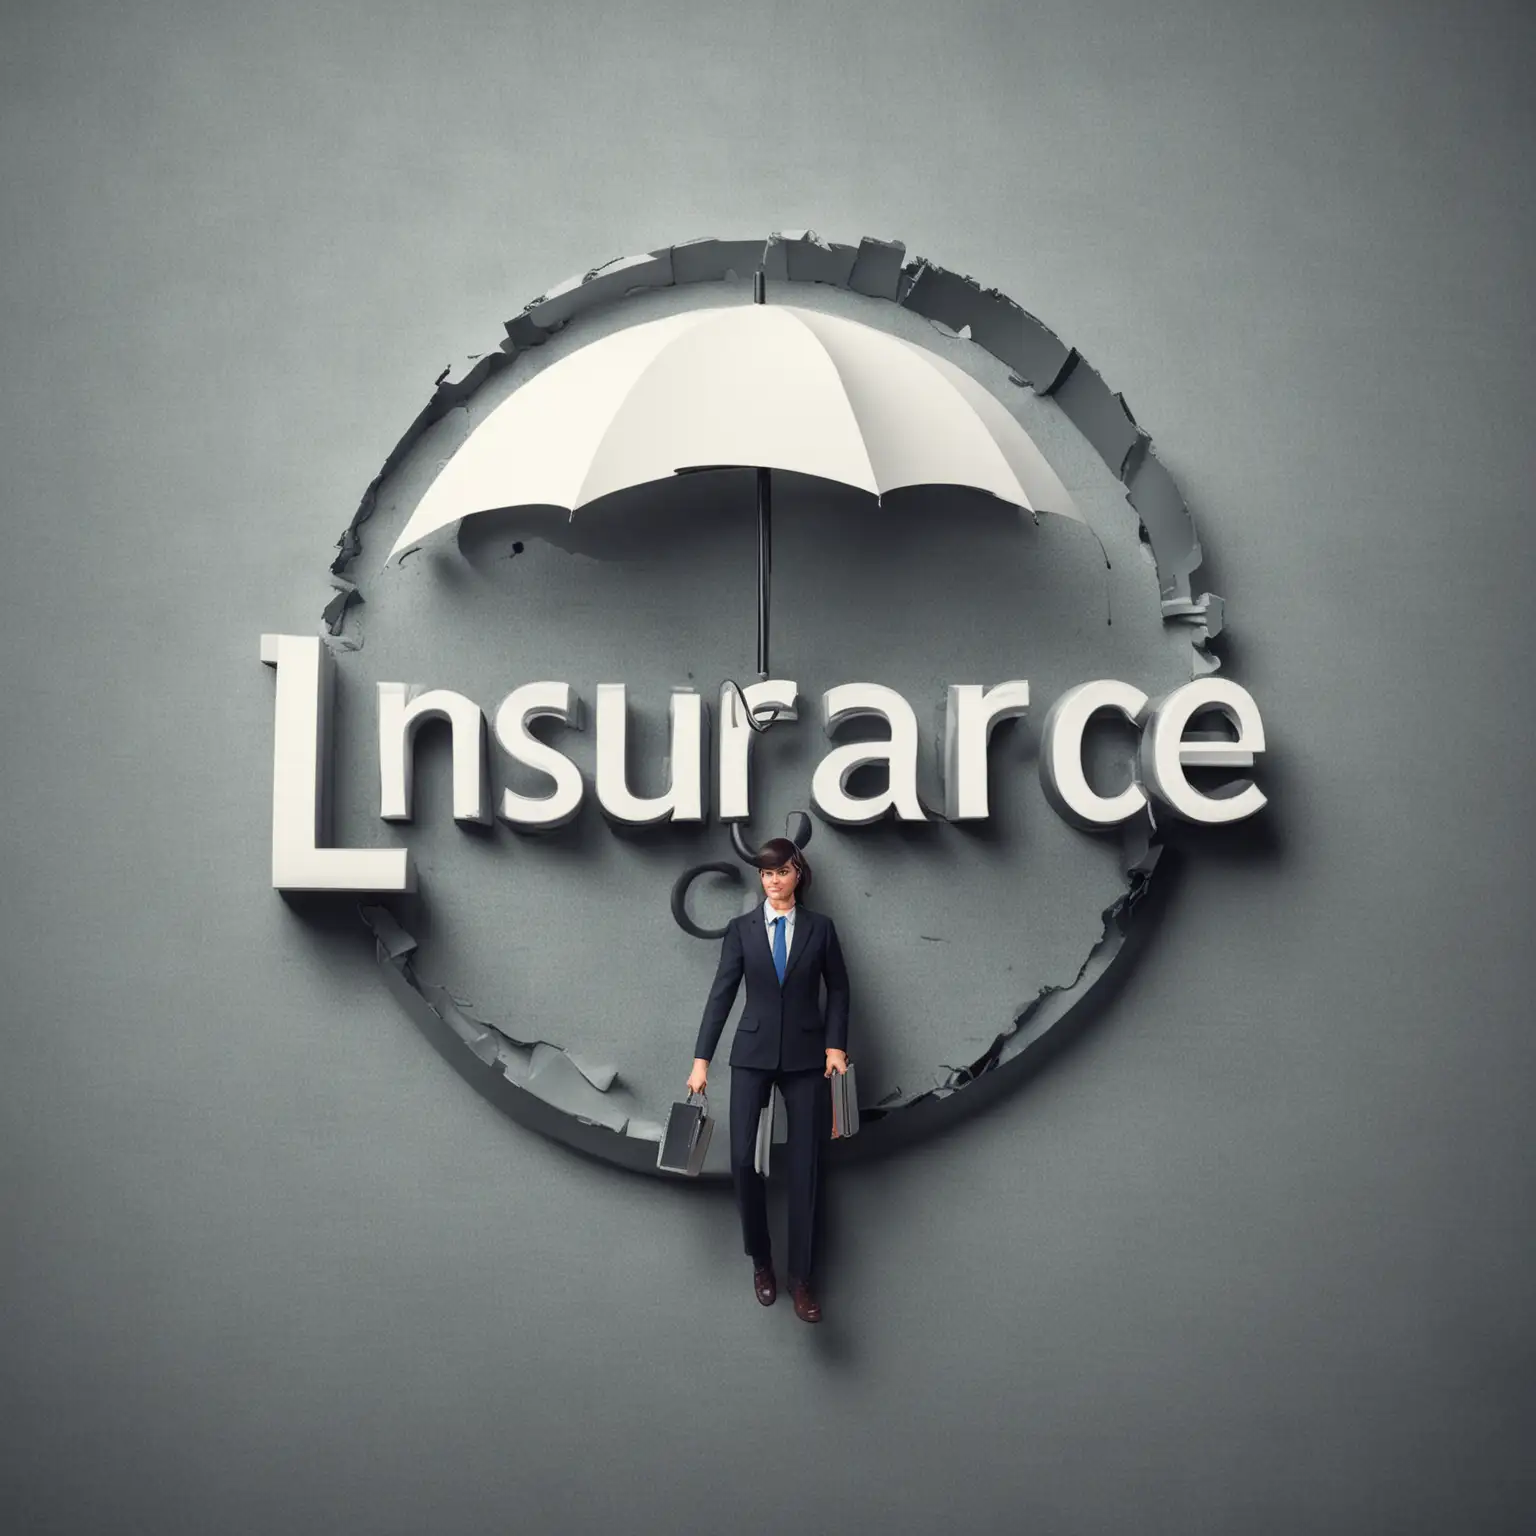 Life as Logo
Insurance Agent 